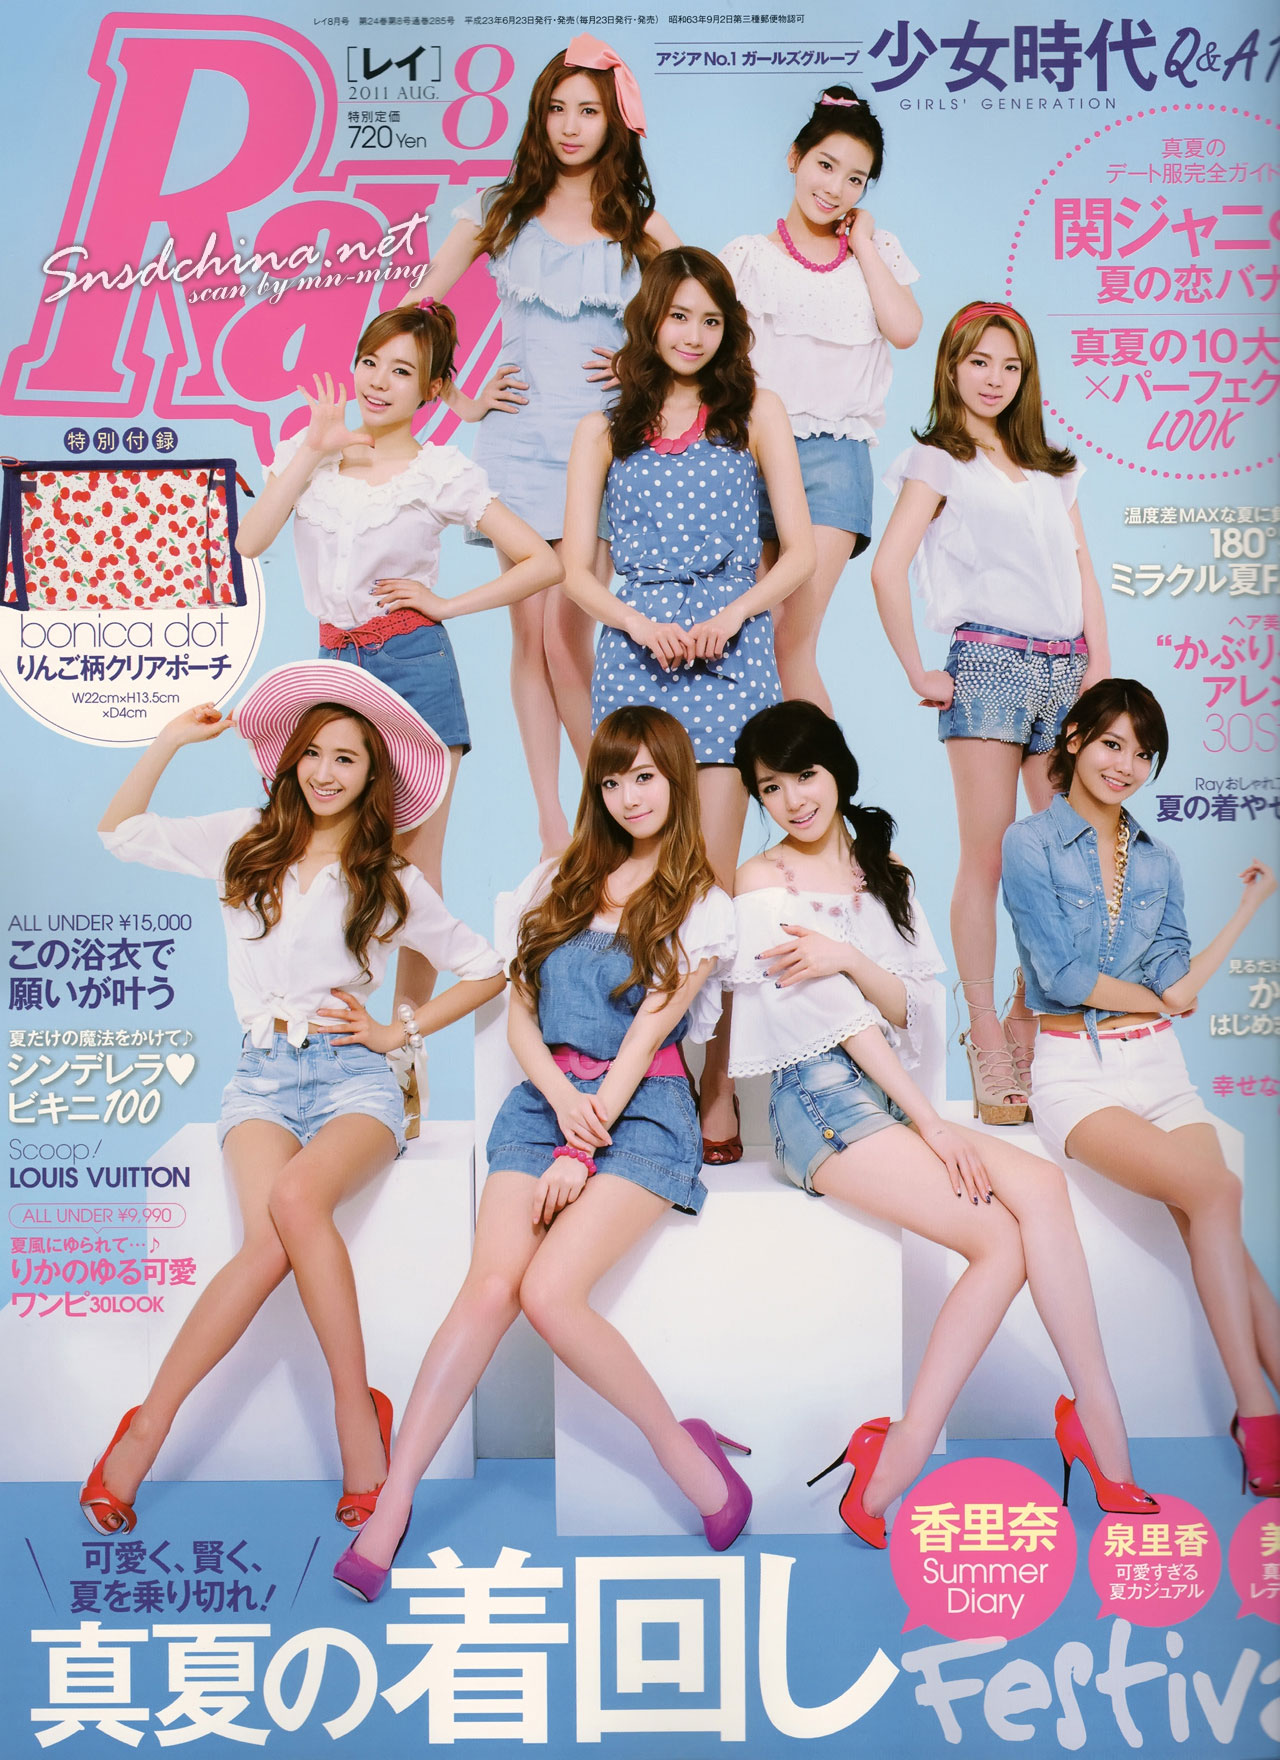 Japan Ray Magazine HQ scan